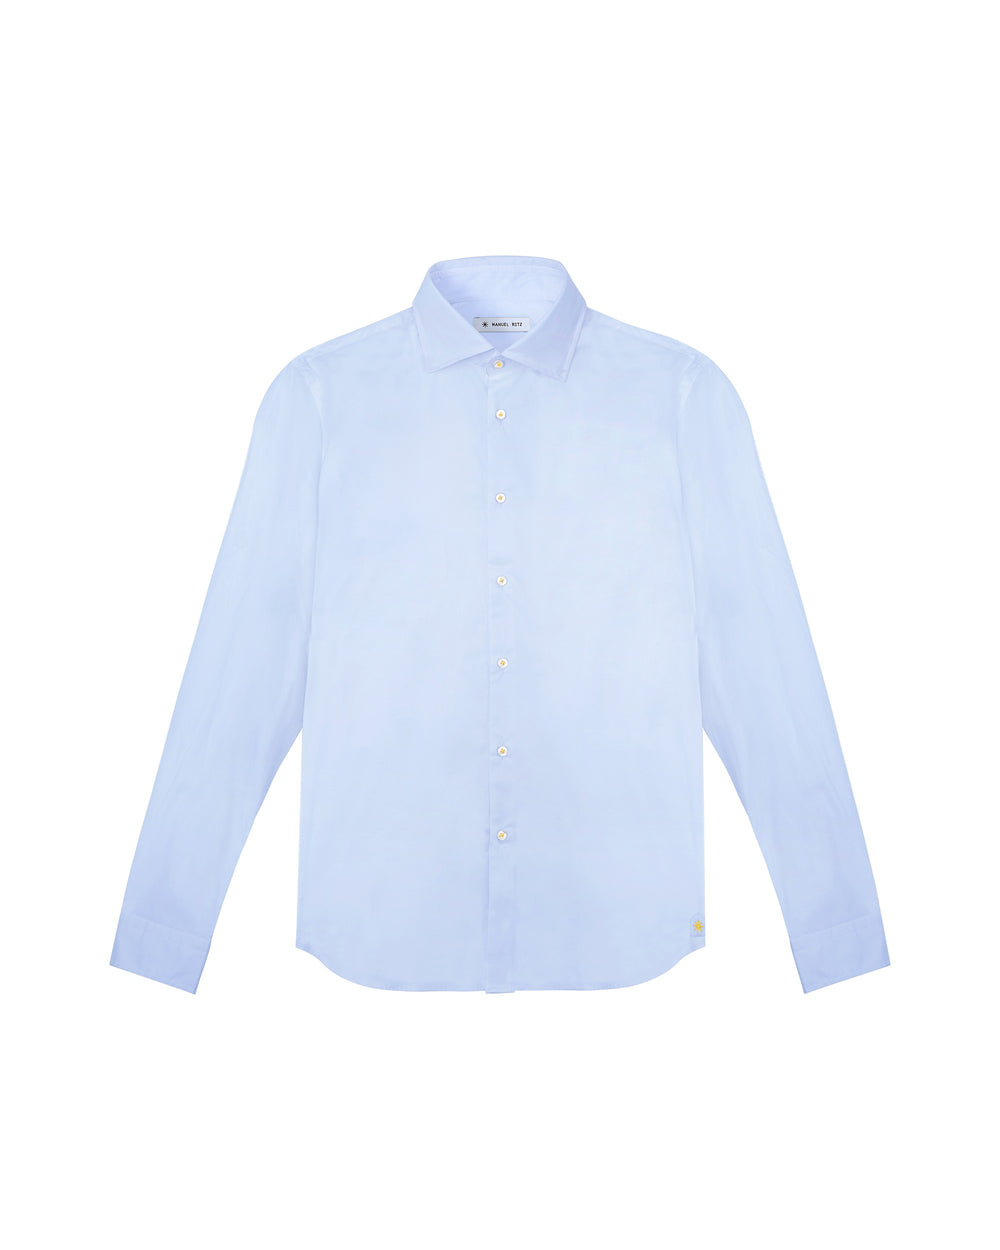 sky blue slim fit shirt in stretch cotton poplin